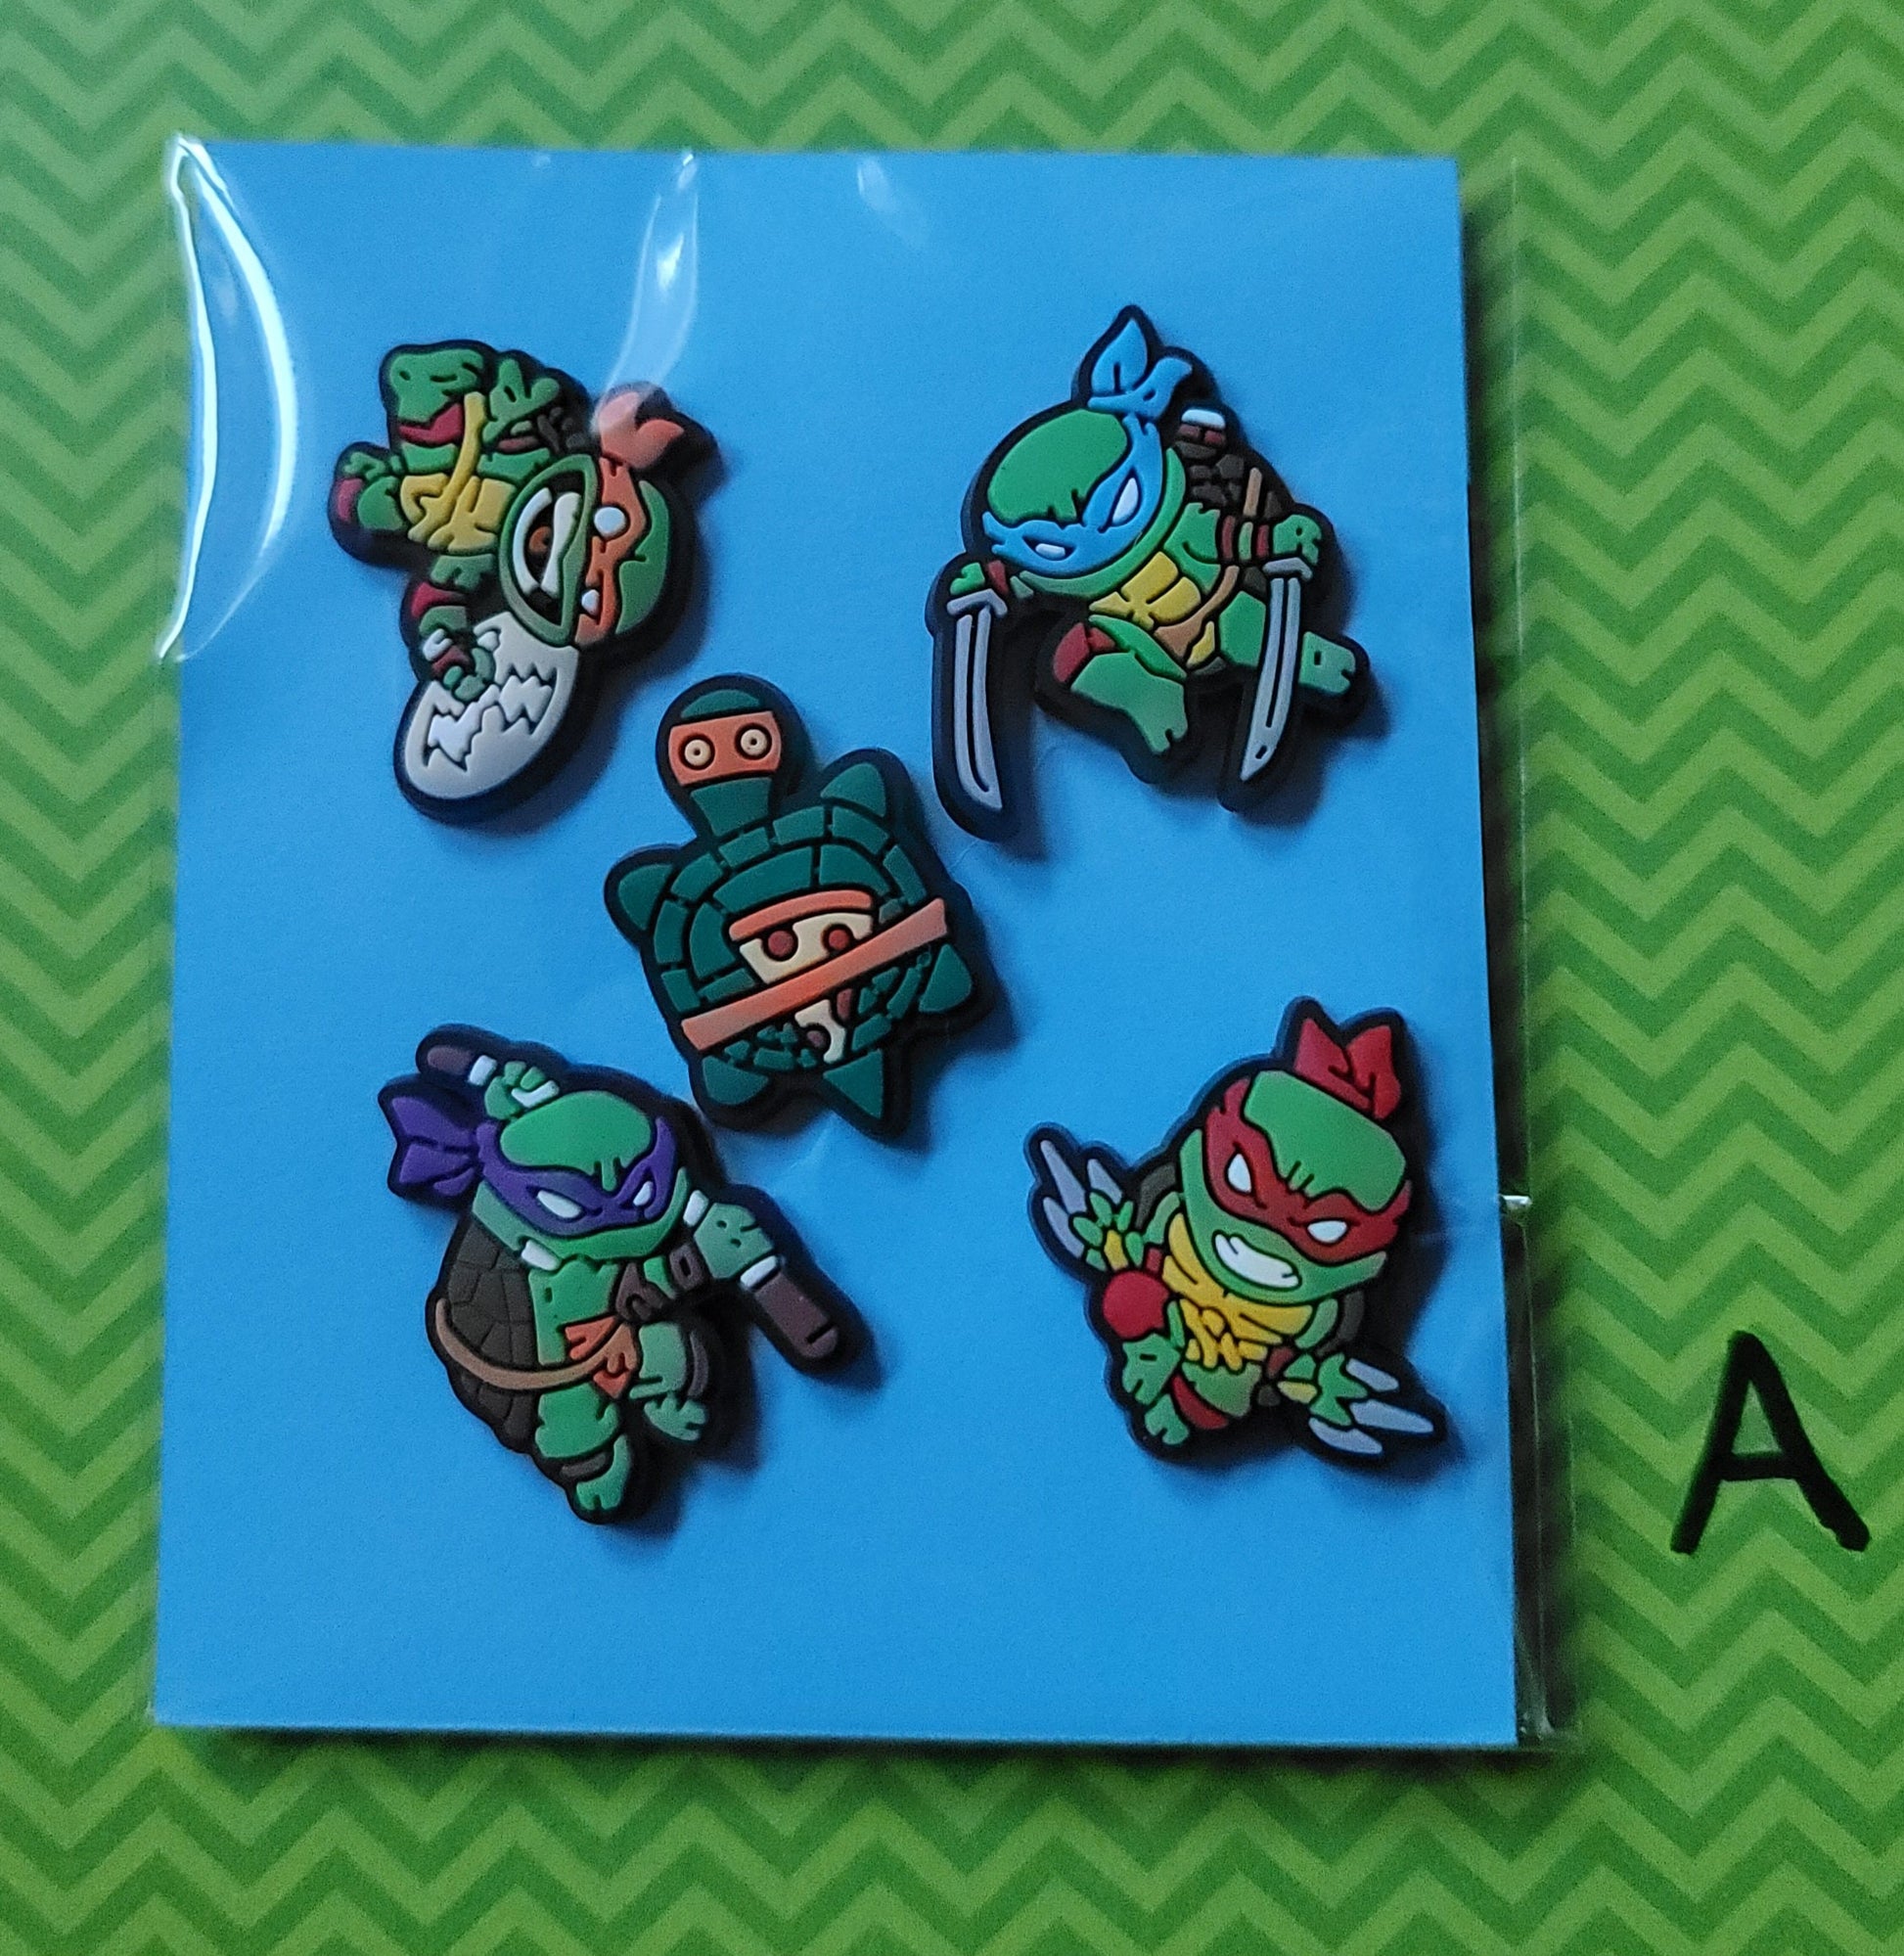 Ninja Turtle Inspired Croc Charms, Turtle Croc Charms, Shoe Charms, Ninja Turtle Inspired Croc Accessory, Ninja Flair, Turtle Flair, Jibbitz